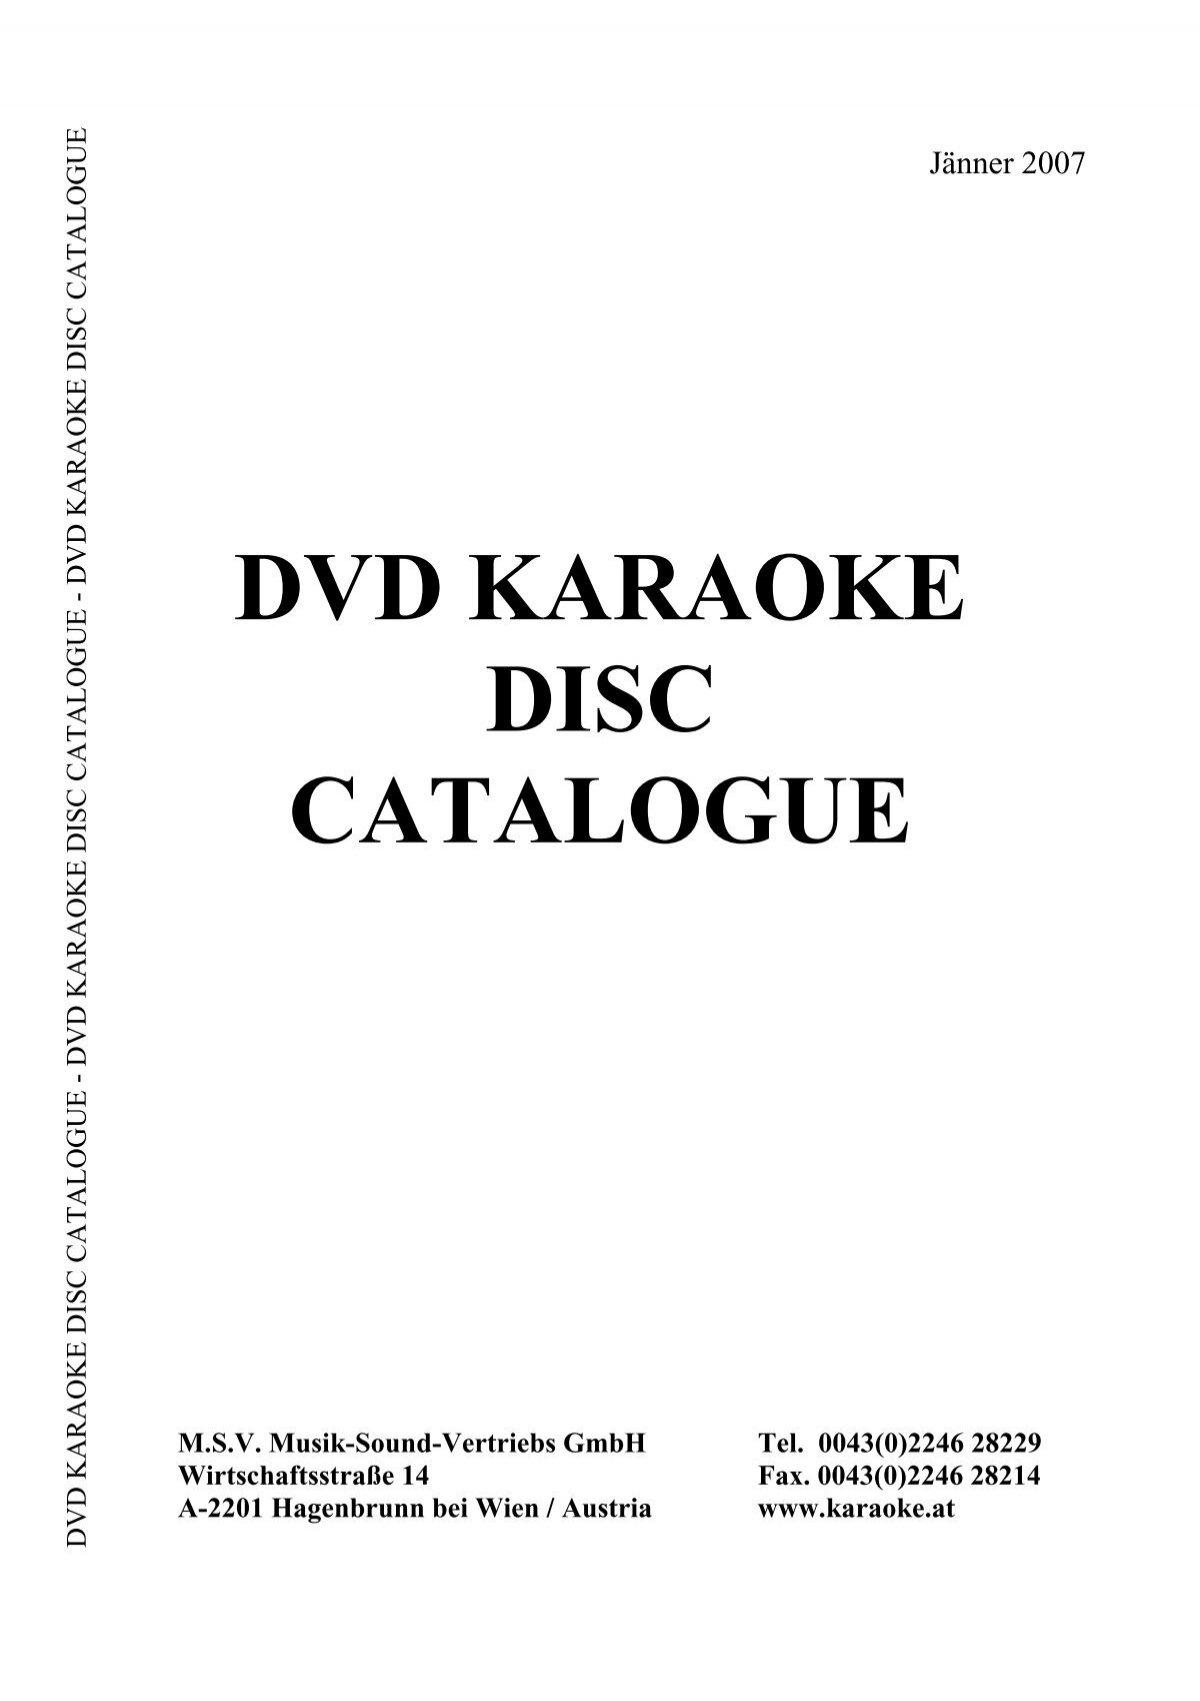 dvd karaoke disc catalogue -